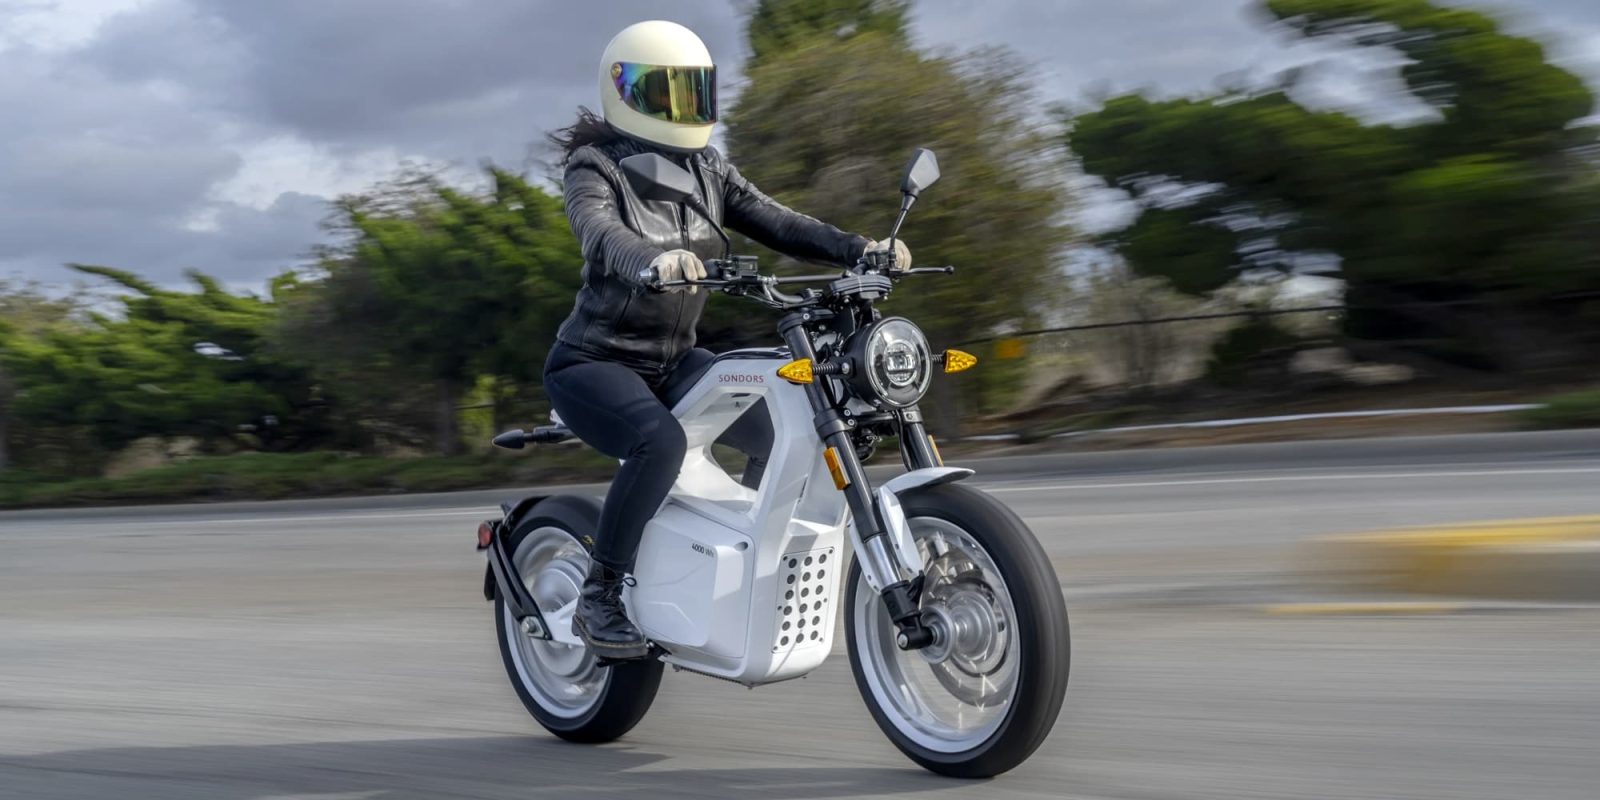 SONDORS sold 1,000 Metacycle electric motorcycles in a week